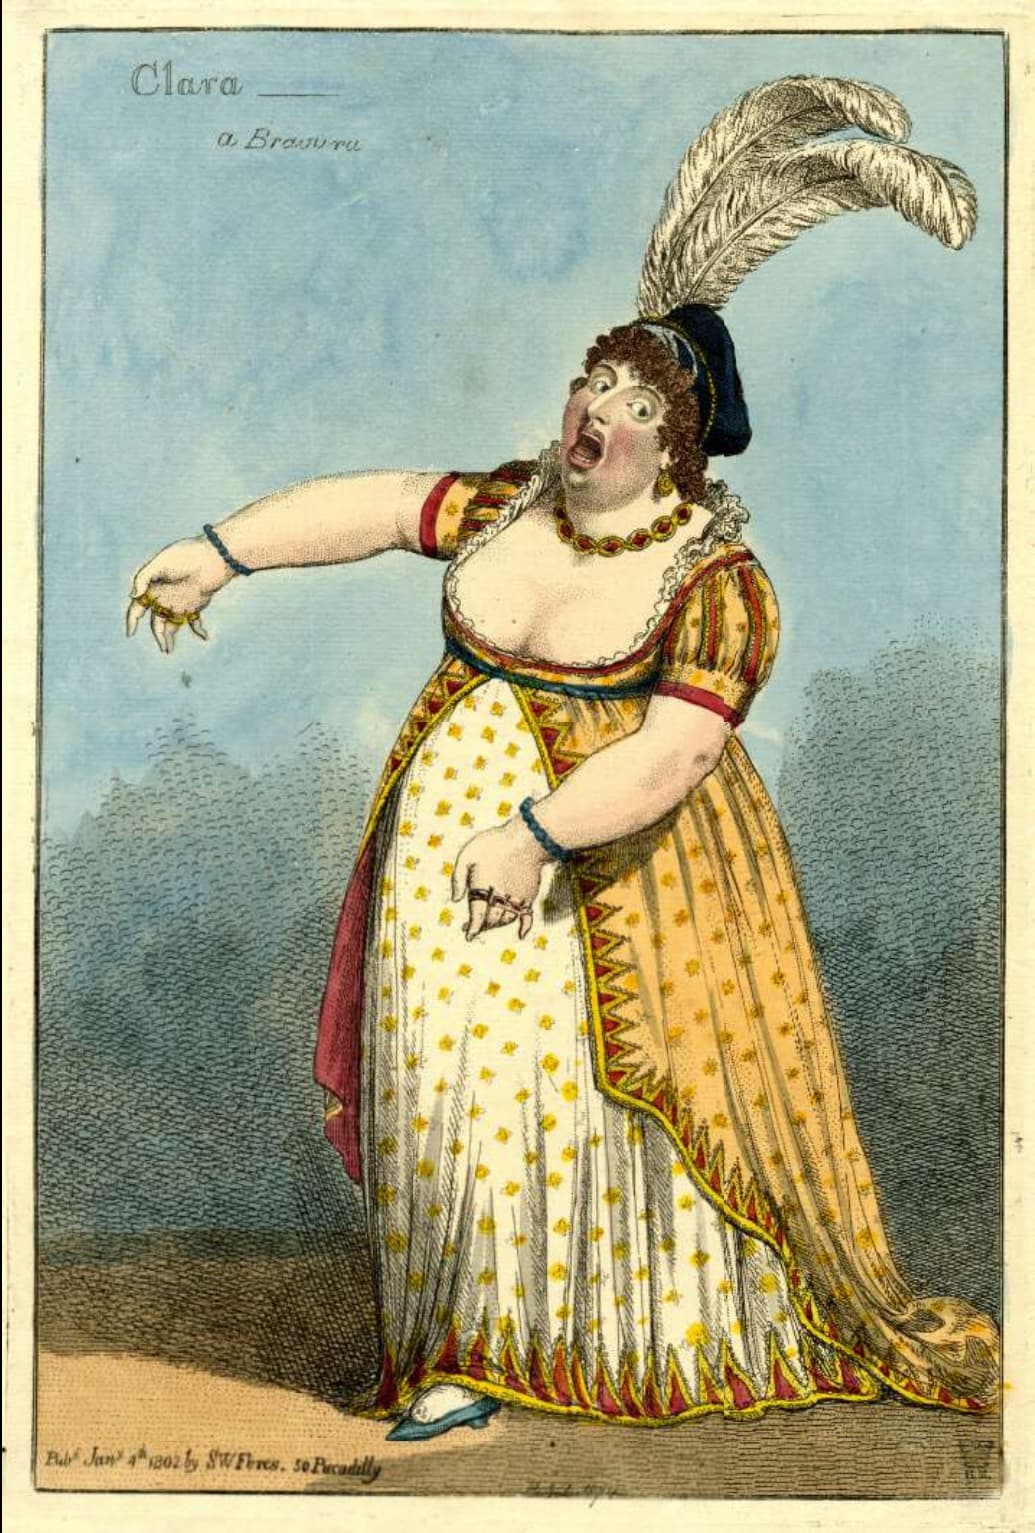 Gillray: Clara - a Bravura, 4 January 1802 (British Museum)